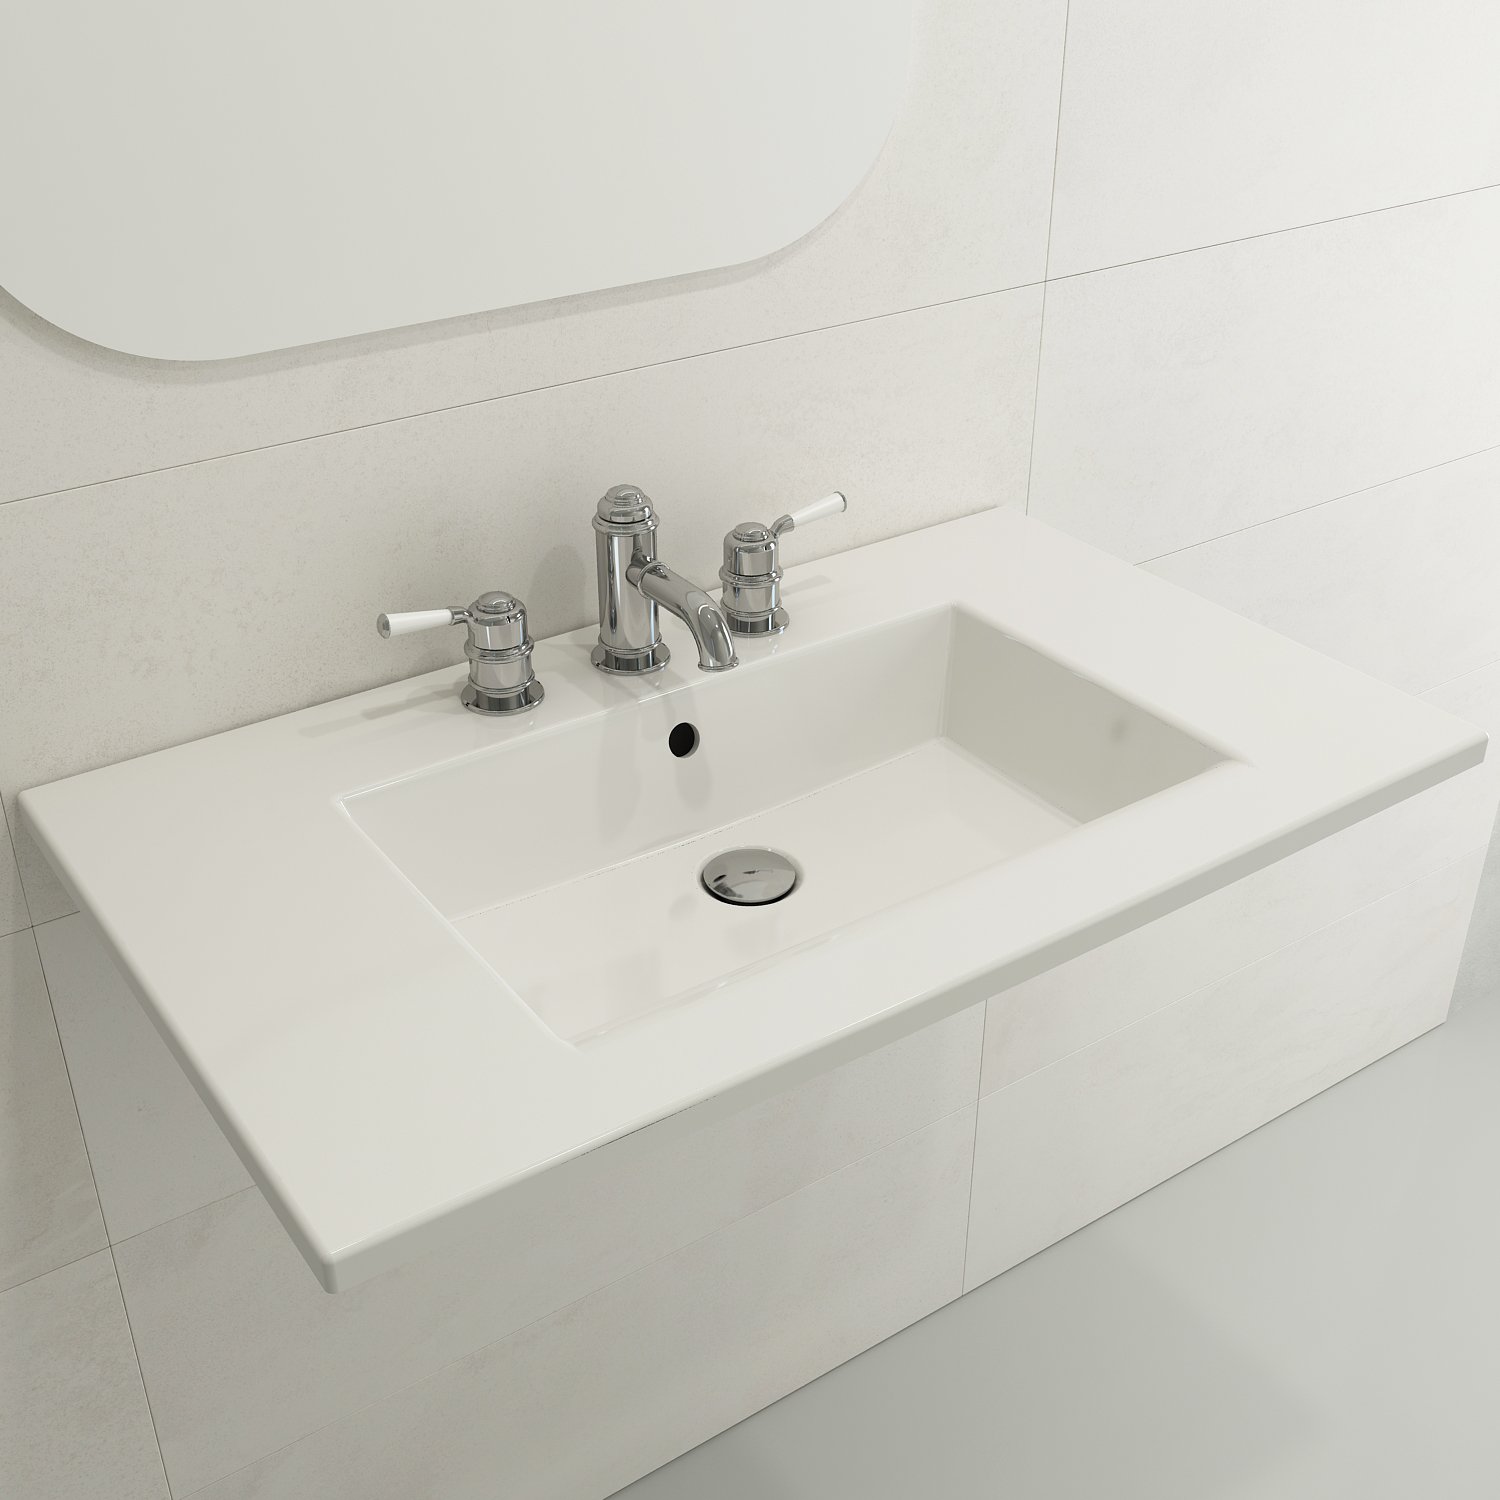 RAVENNA 32 Bathroom sink with single-hole faucet setting 1113-001 